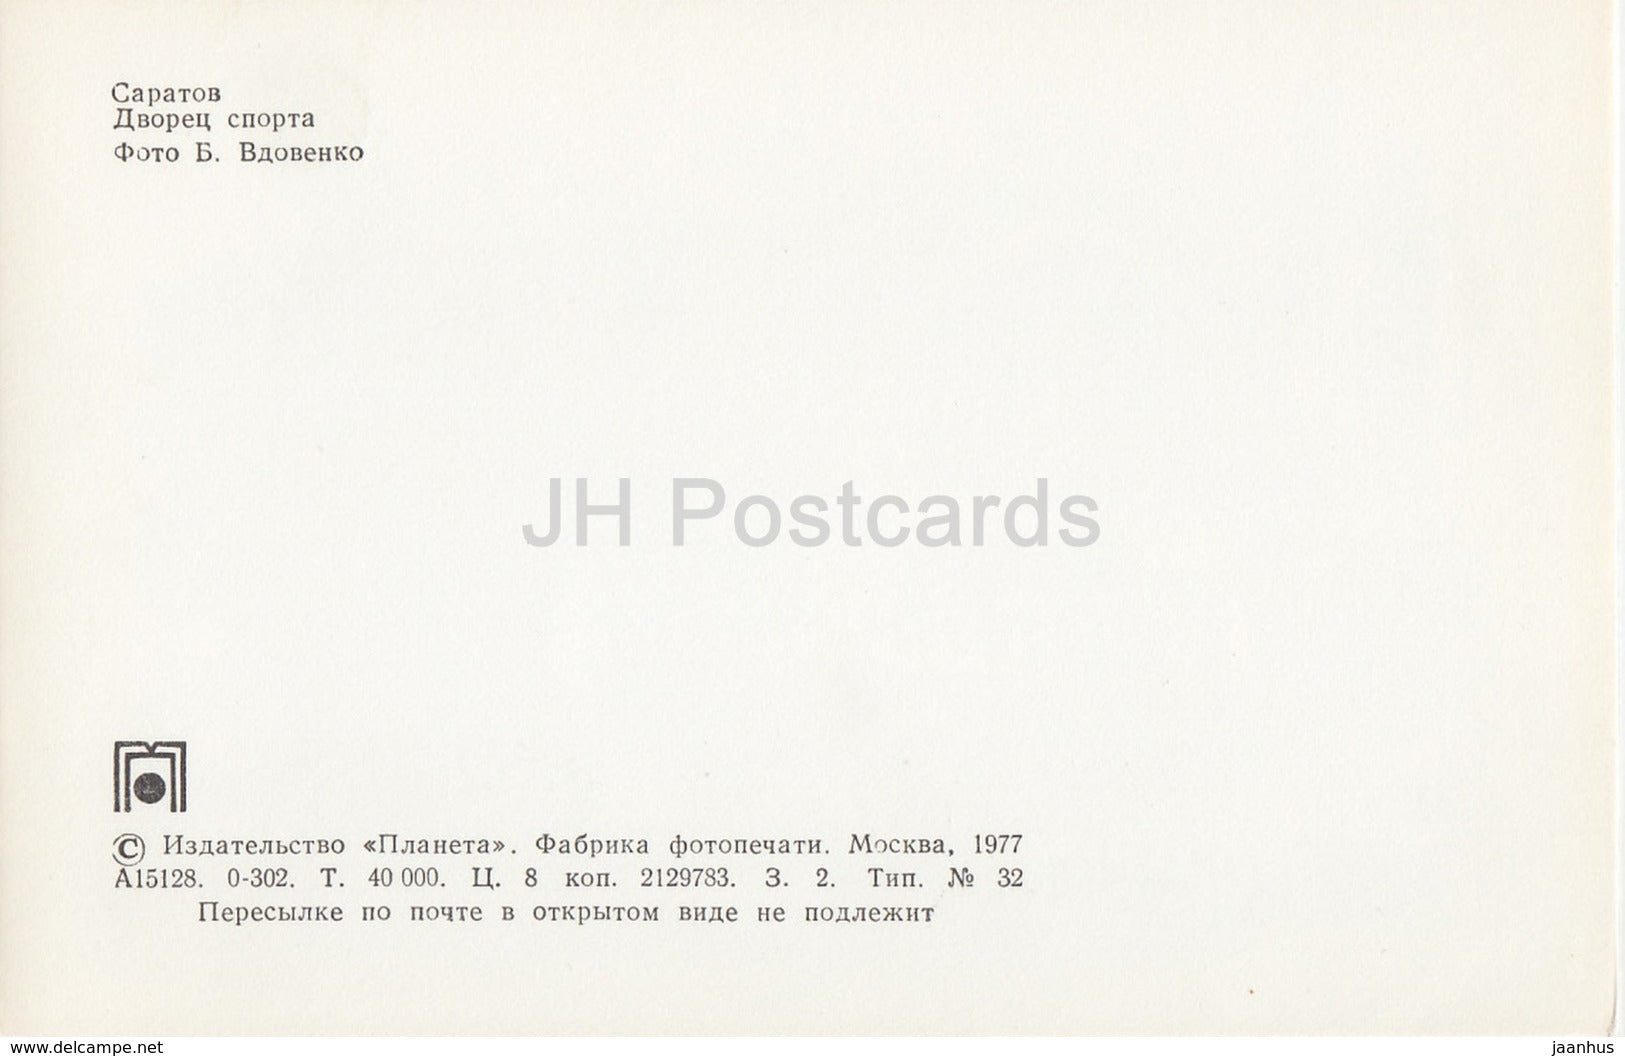 Saratov - Palace of Sports - 1977 - Russia USSR - unused - JH Postcards